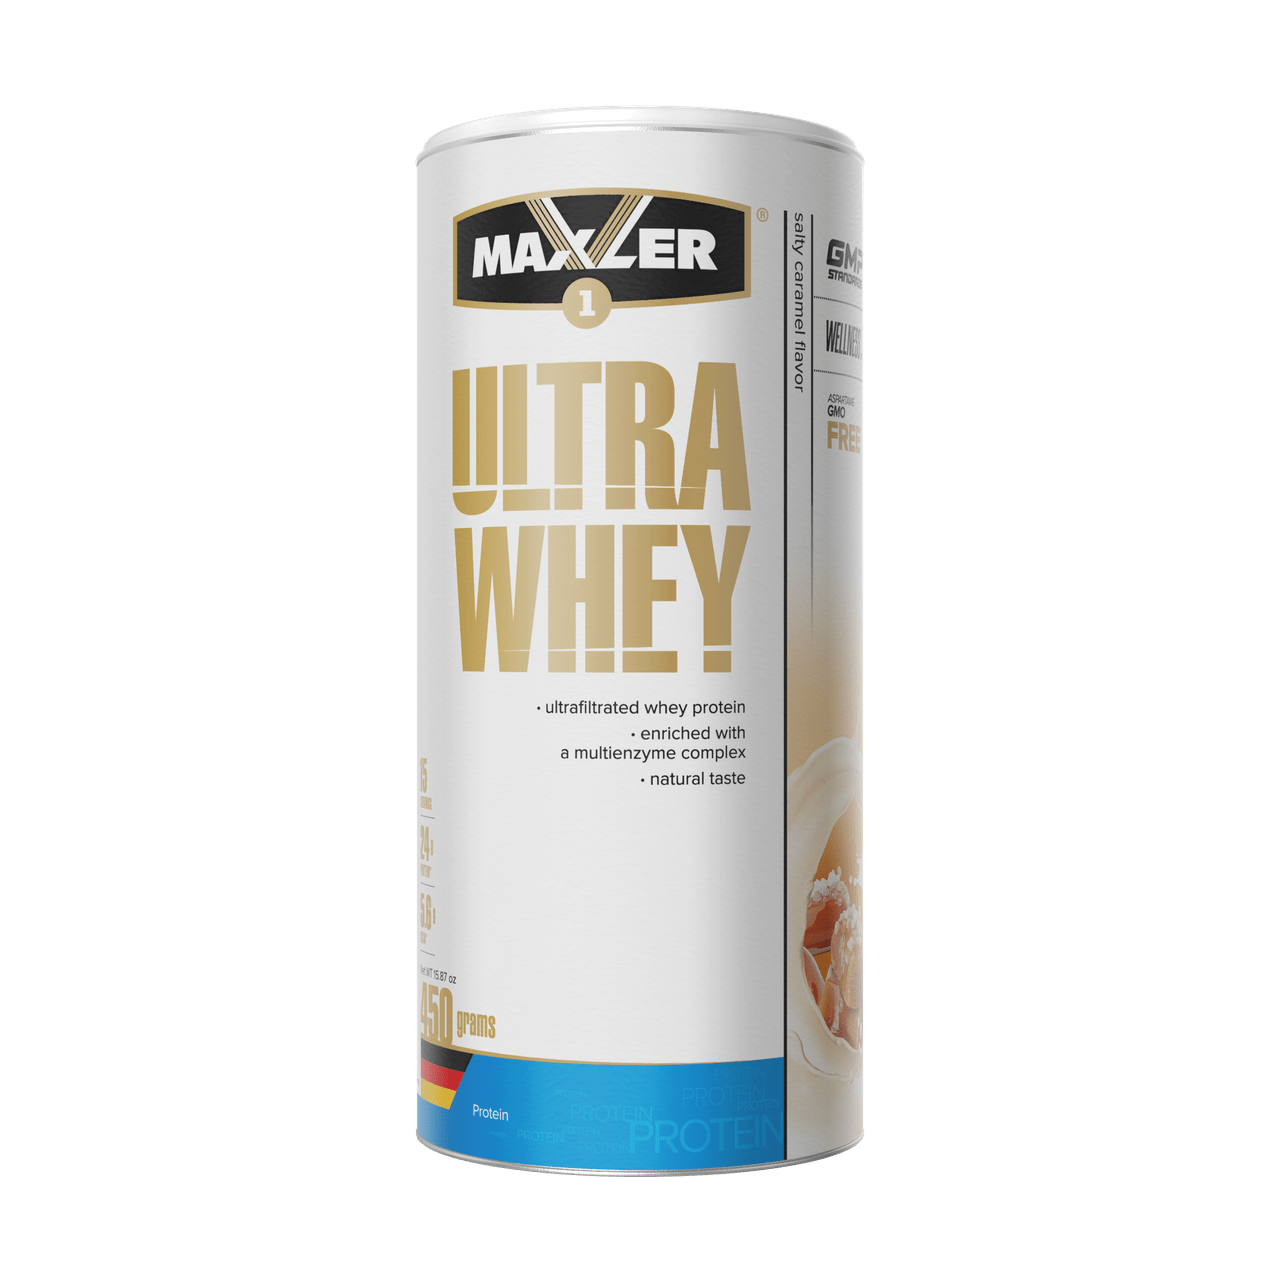 Комплексный протеин Maxler Ultra Whey (450 г) макслер ультра вей salty caramel,  ml, Maxler. Protein Blend. 